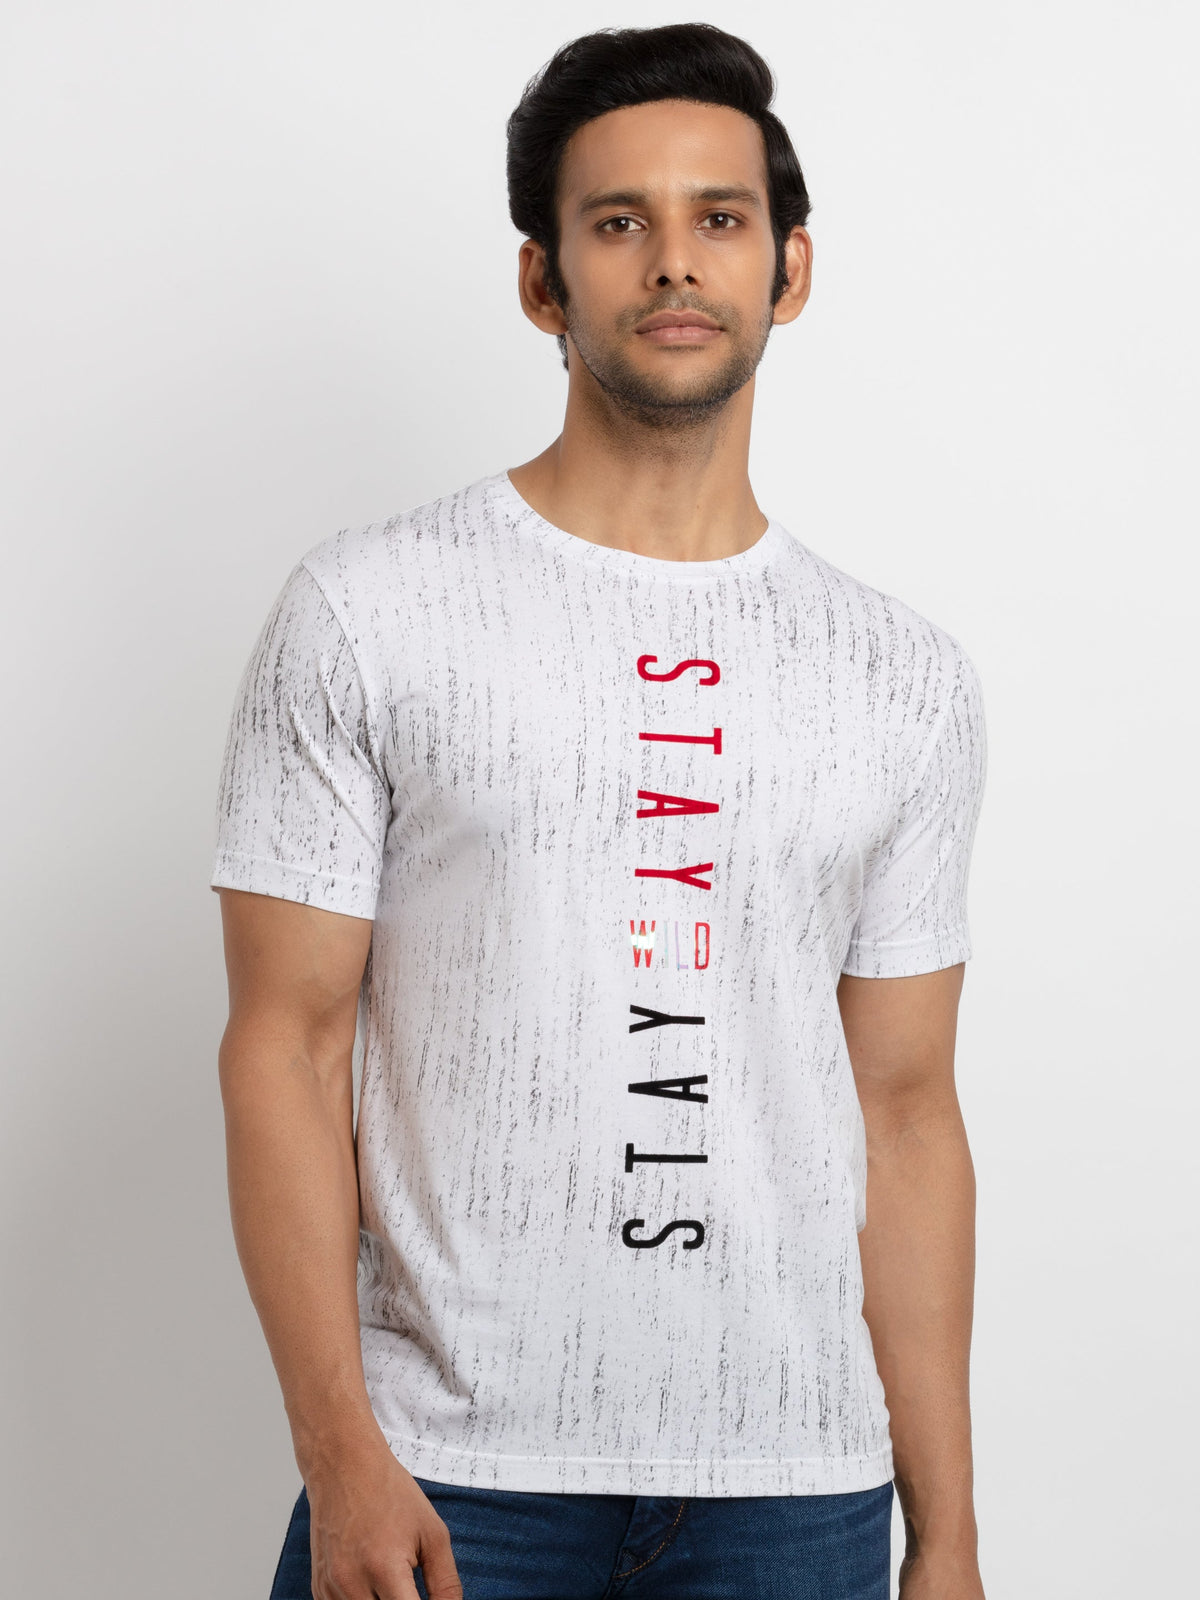 Status Quo | Round Neck T-Shirt - S, M, L, XL, XXL